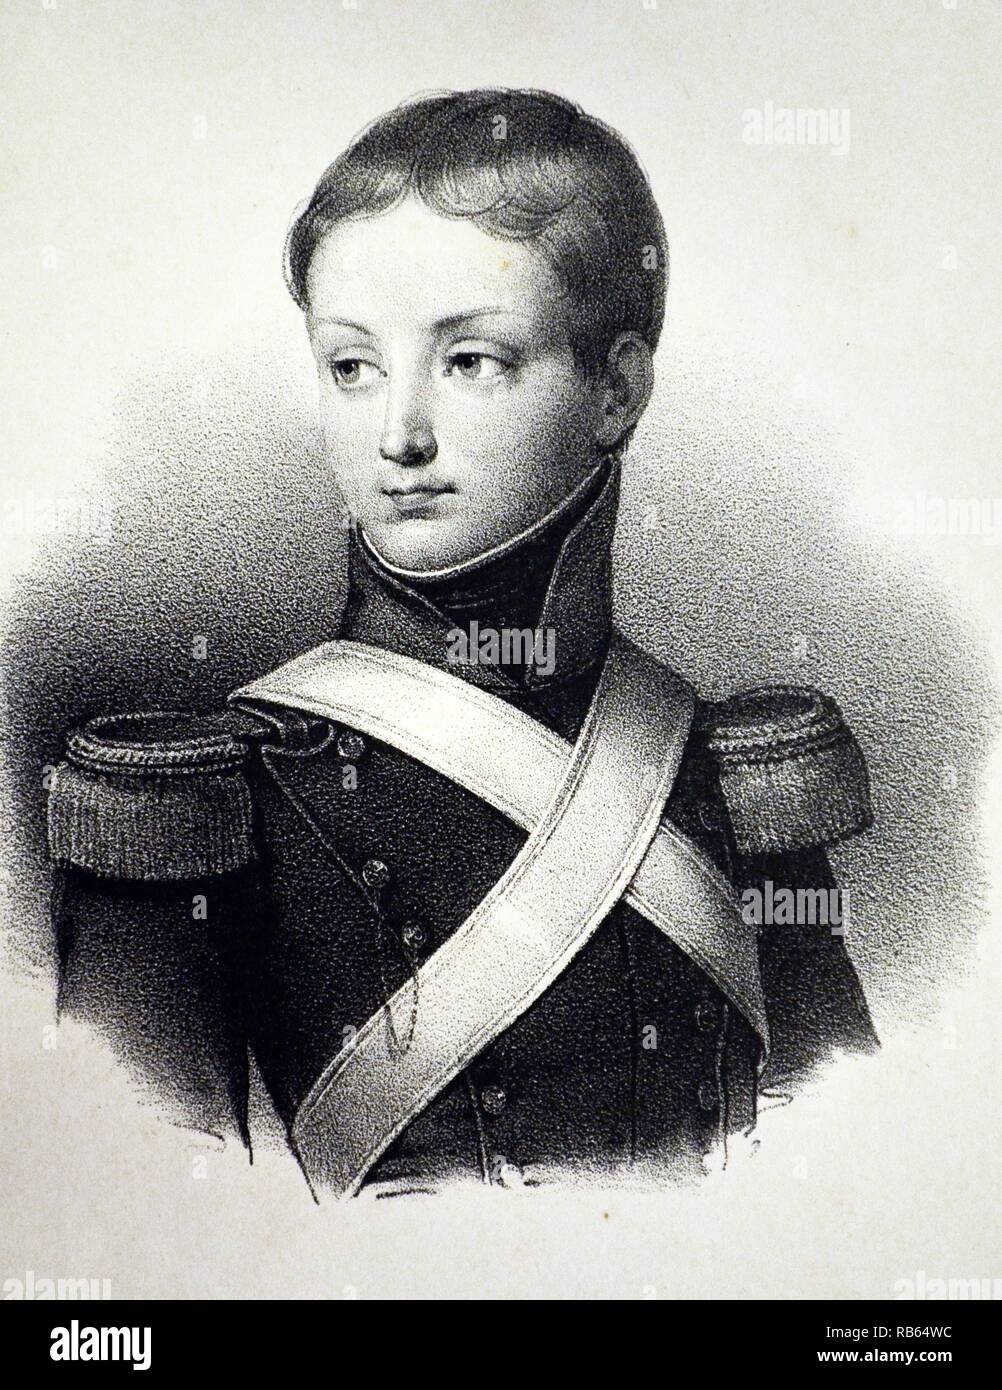 Francois Prince De Joinville 1818 1900 Third Son Of Louis Philippe I Of France Lithograph Paris C1840 Stock Photo Alamy